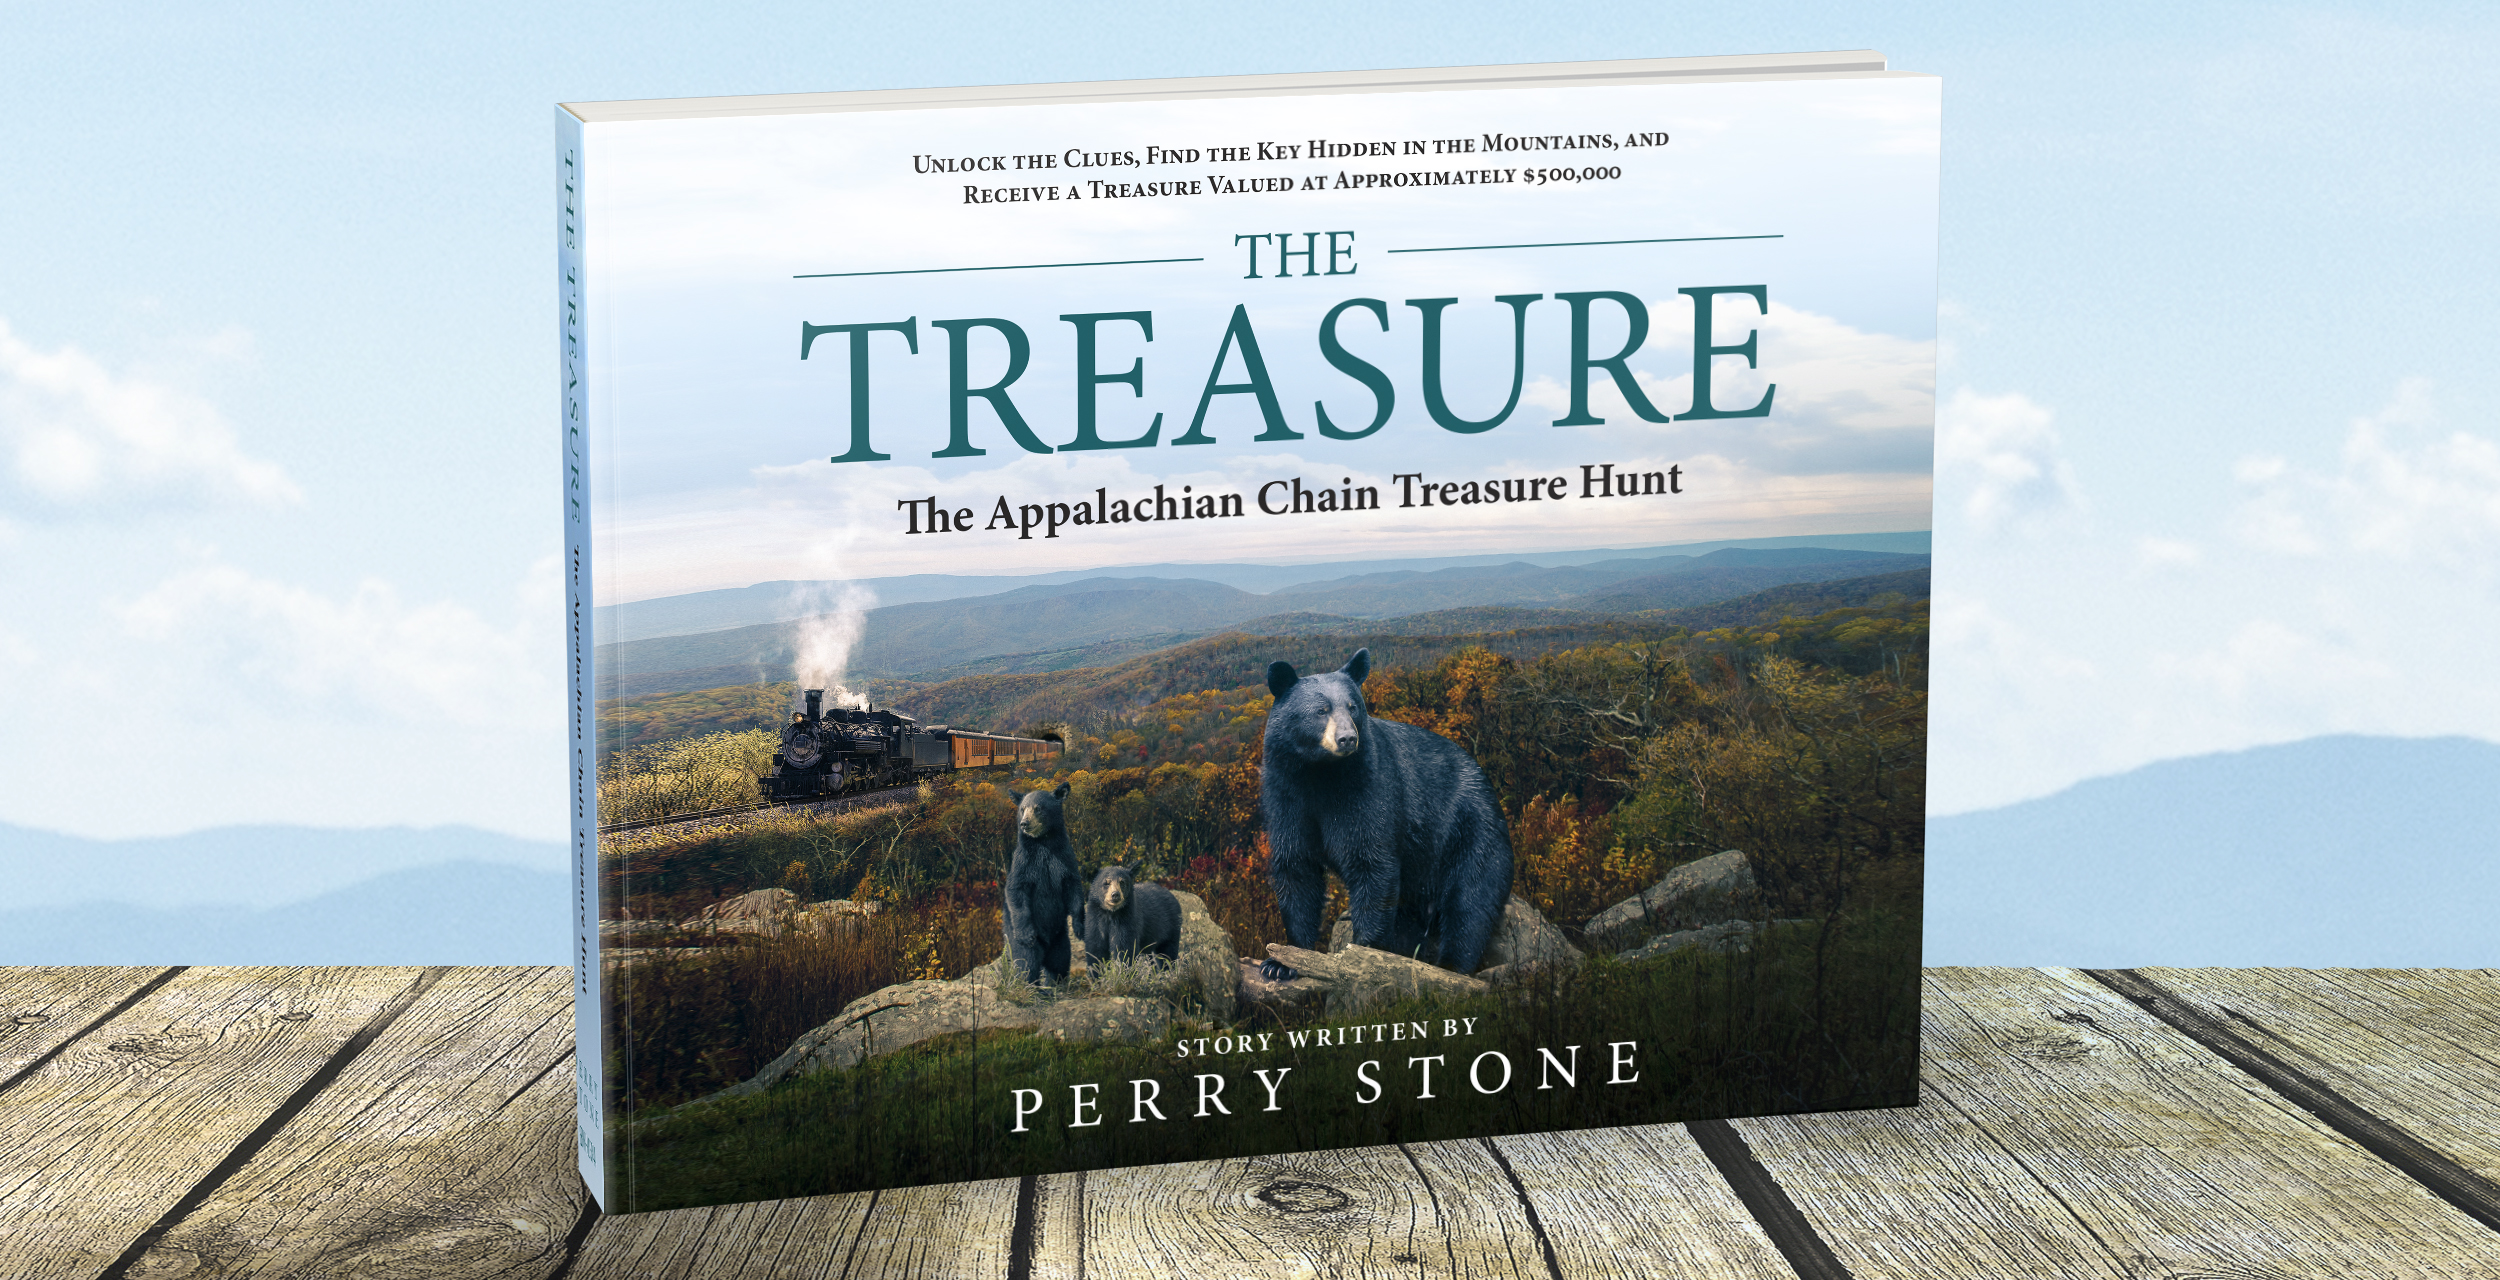 The Appalachian Chain Treasure Hunt